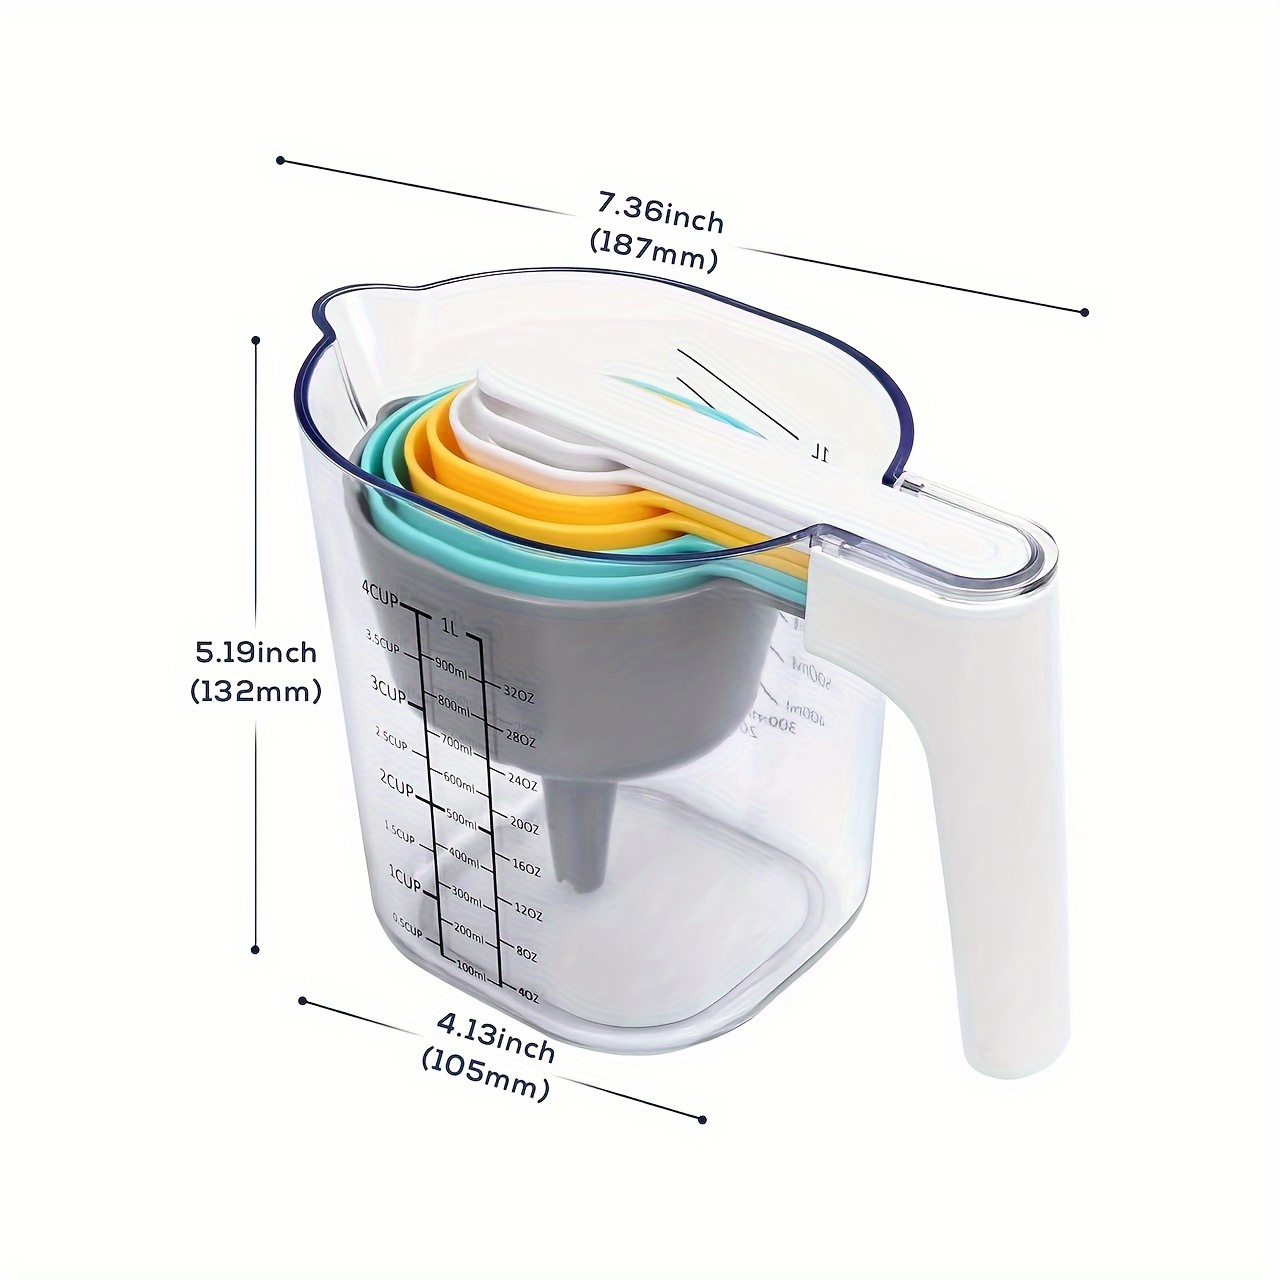 Dishwasher Safe Measuring Cups + Spoons